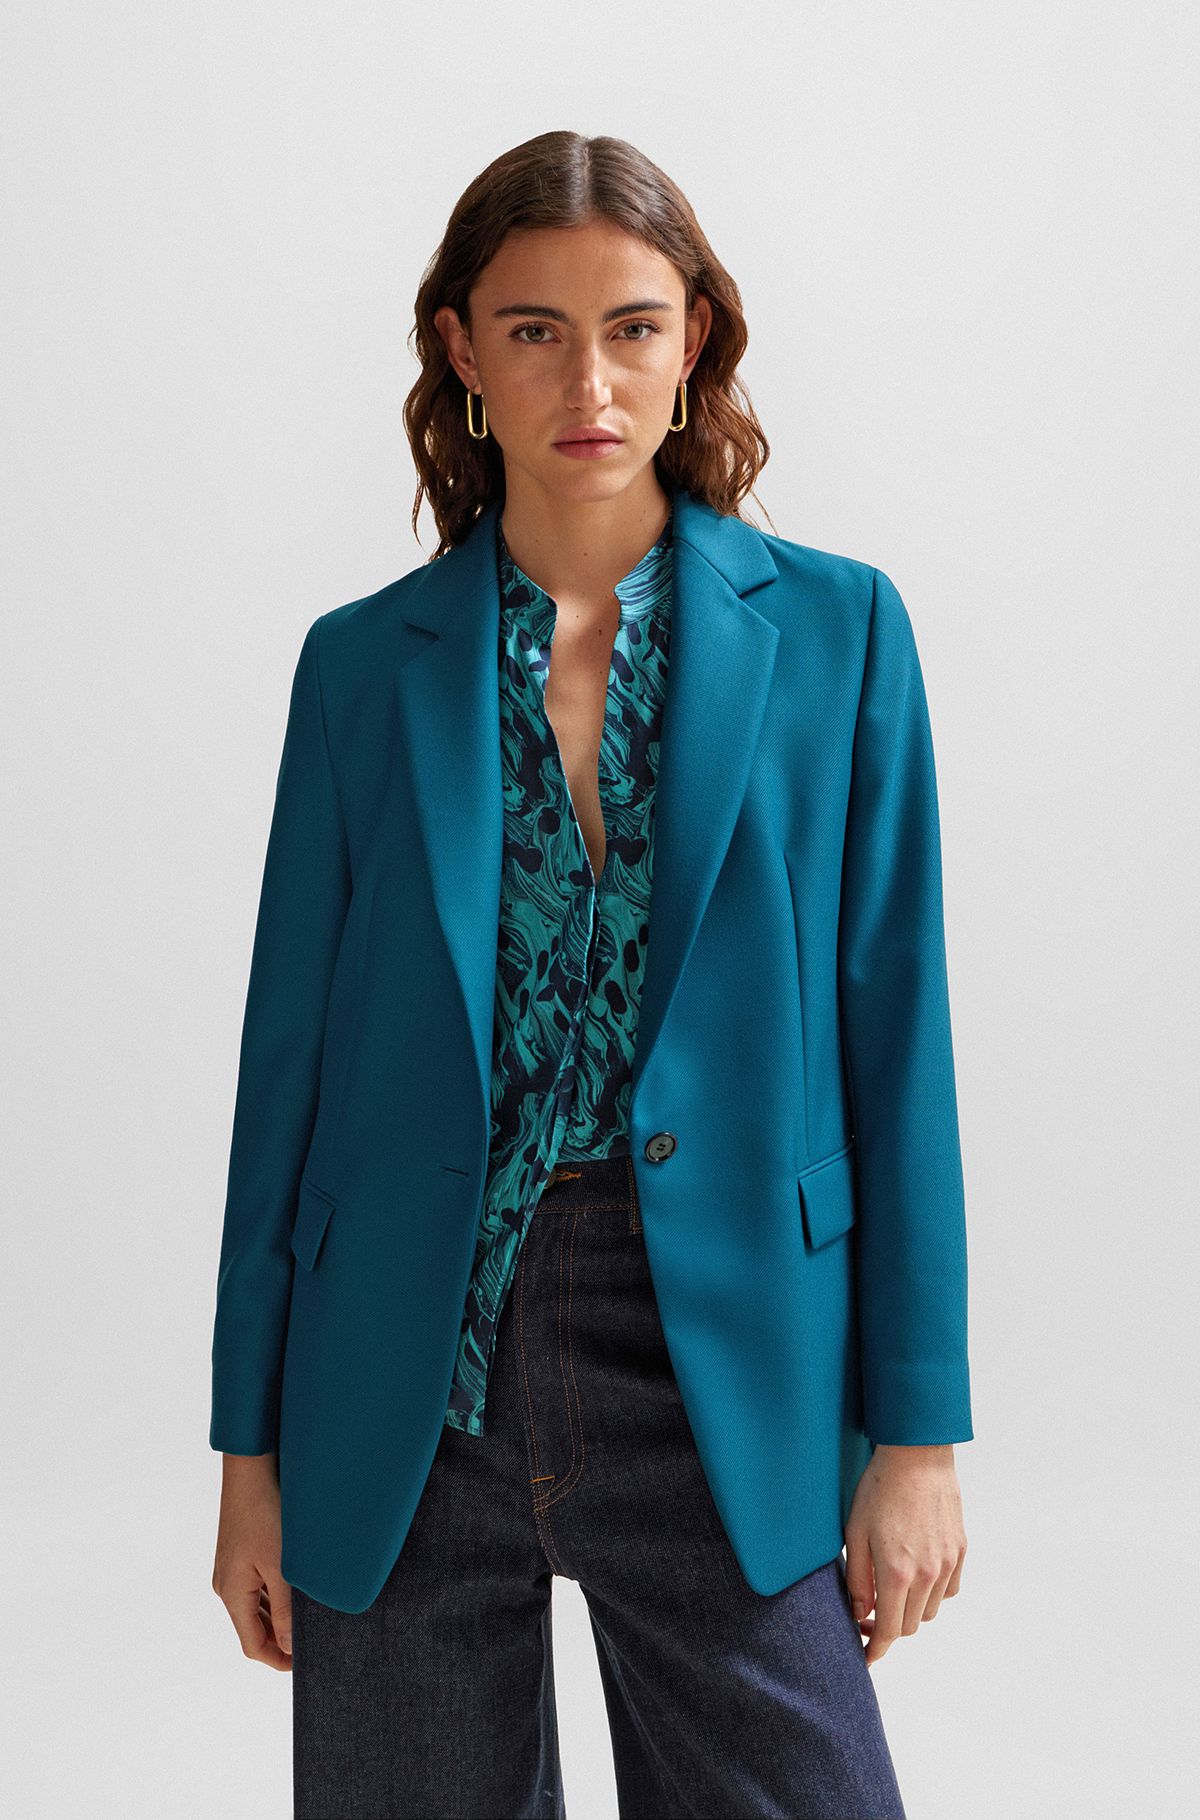 Slim Small Blazer Jacket Women Spring Summer Elegant Casual Business Office  Suit